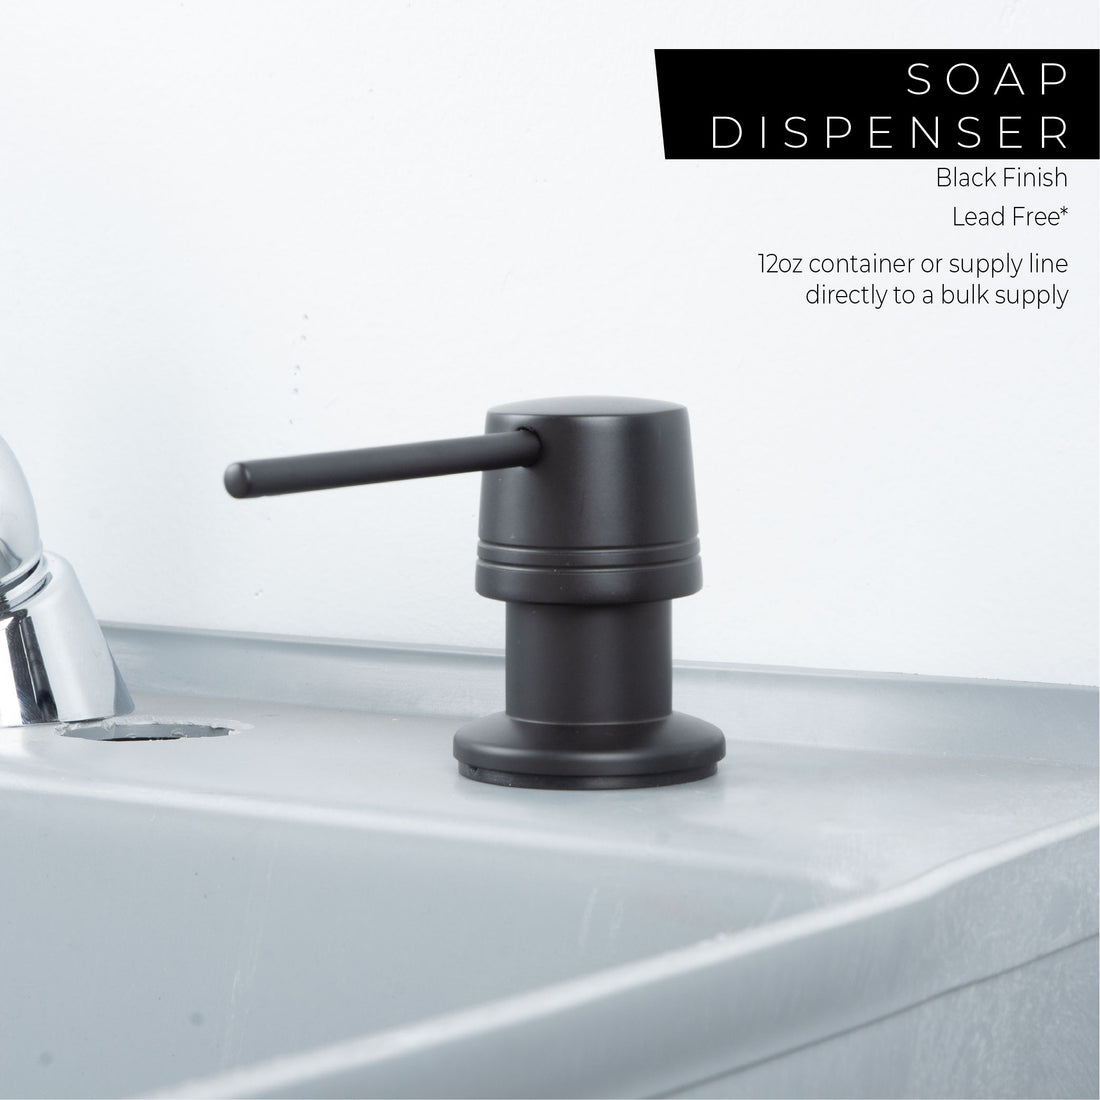 Laundry Tub Soap Dispenser (Black Finish) - Utility sinks vanites Tehila